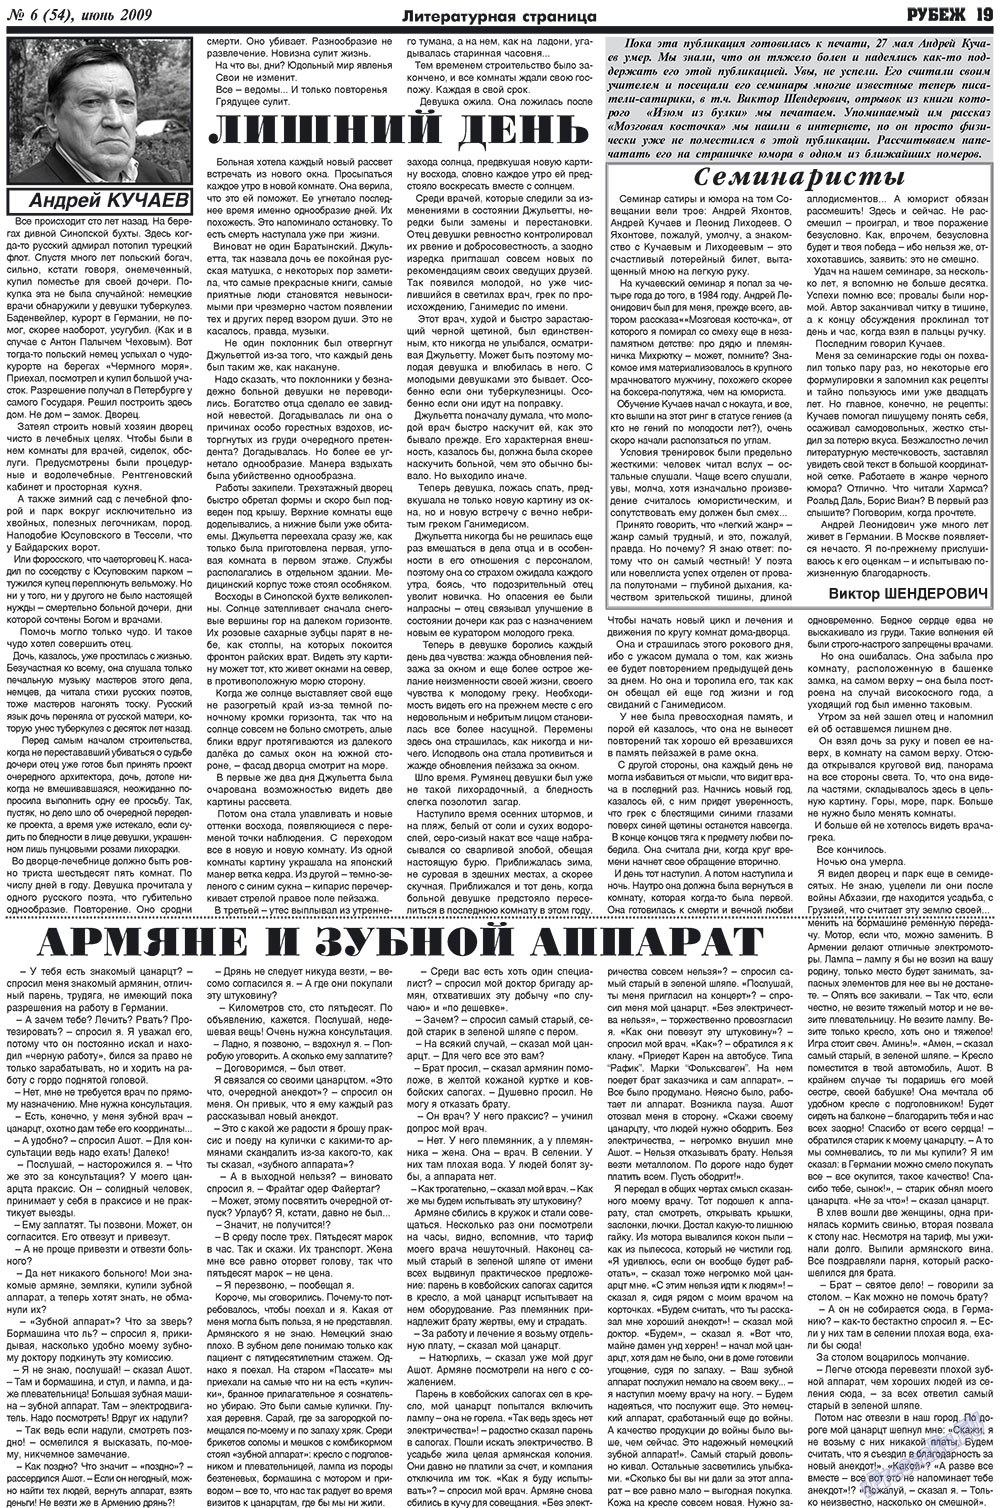 Рубеж, газета. 2009 №6 стр.19